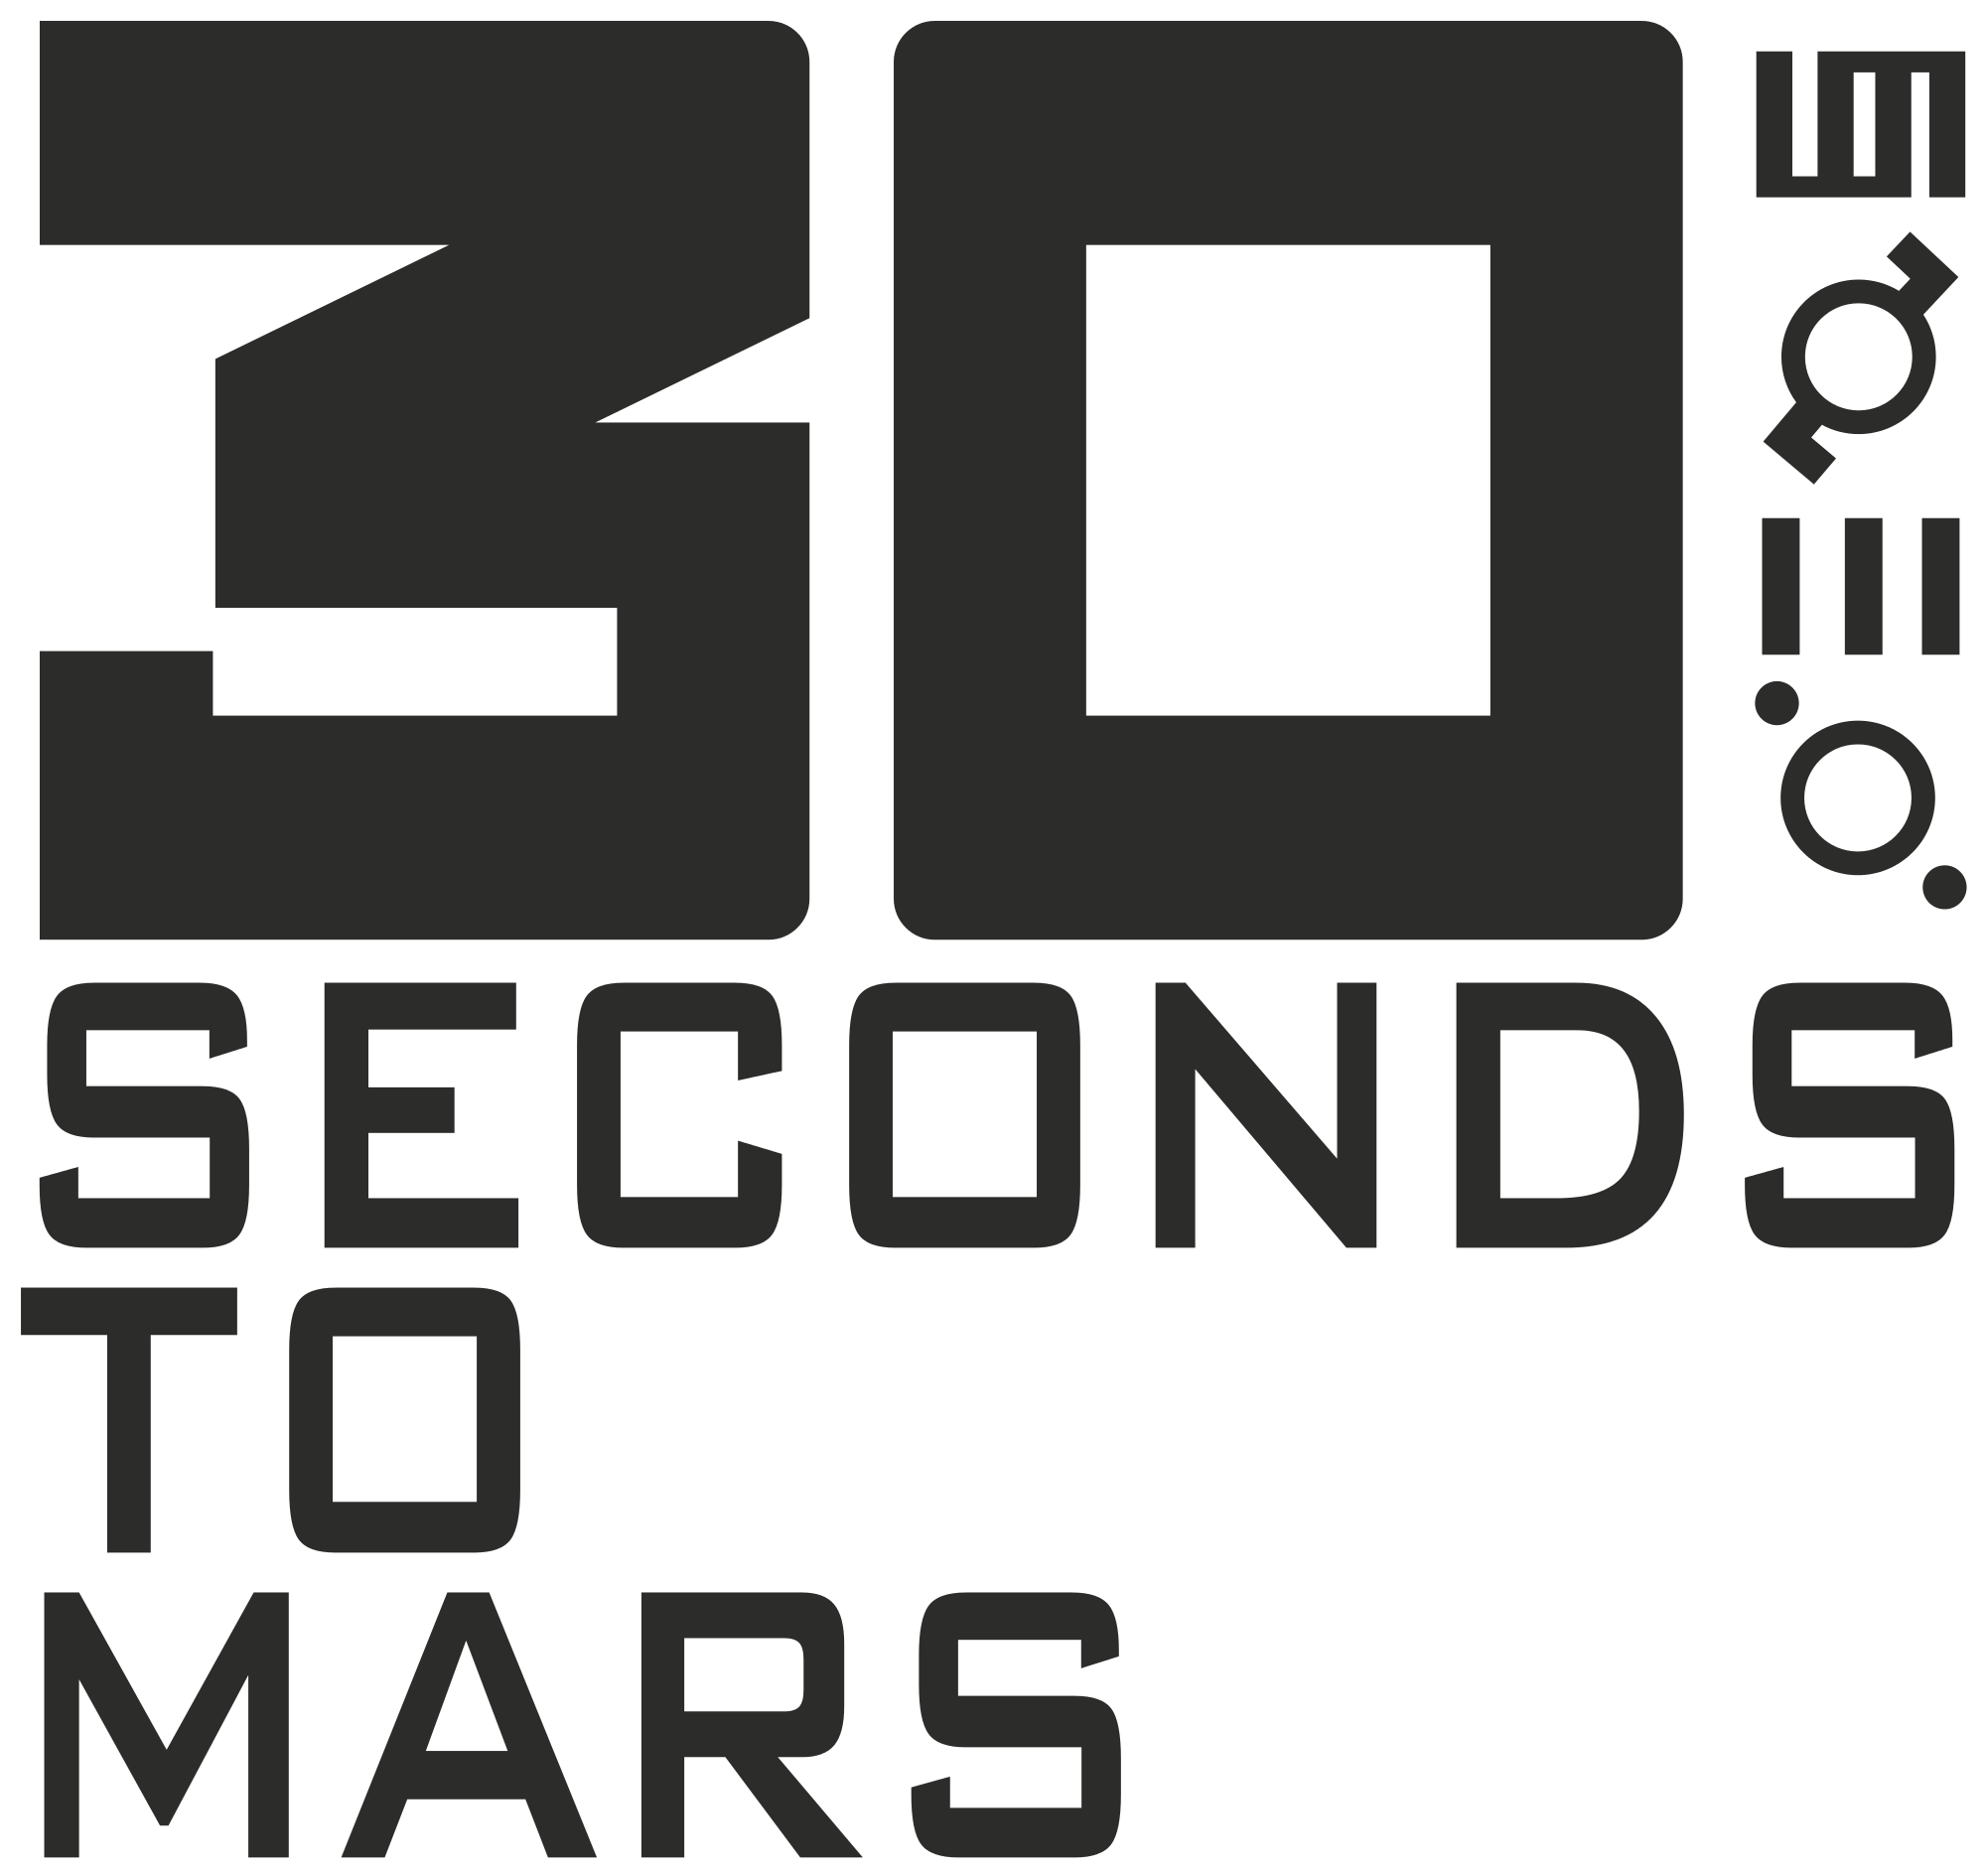 30 seconds to mars logo logodix 30 seconds to mars logo logodix